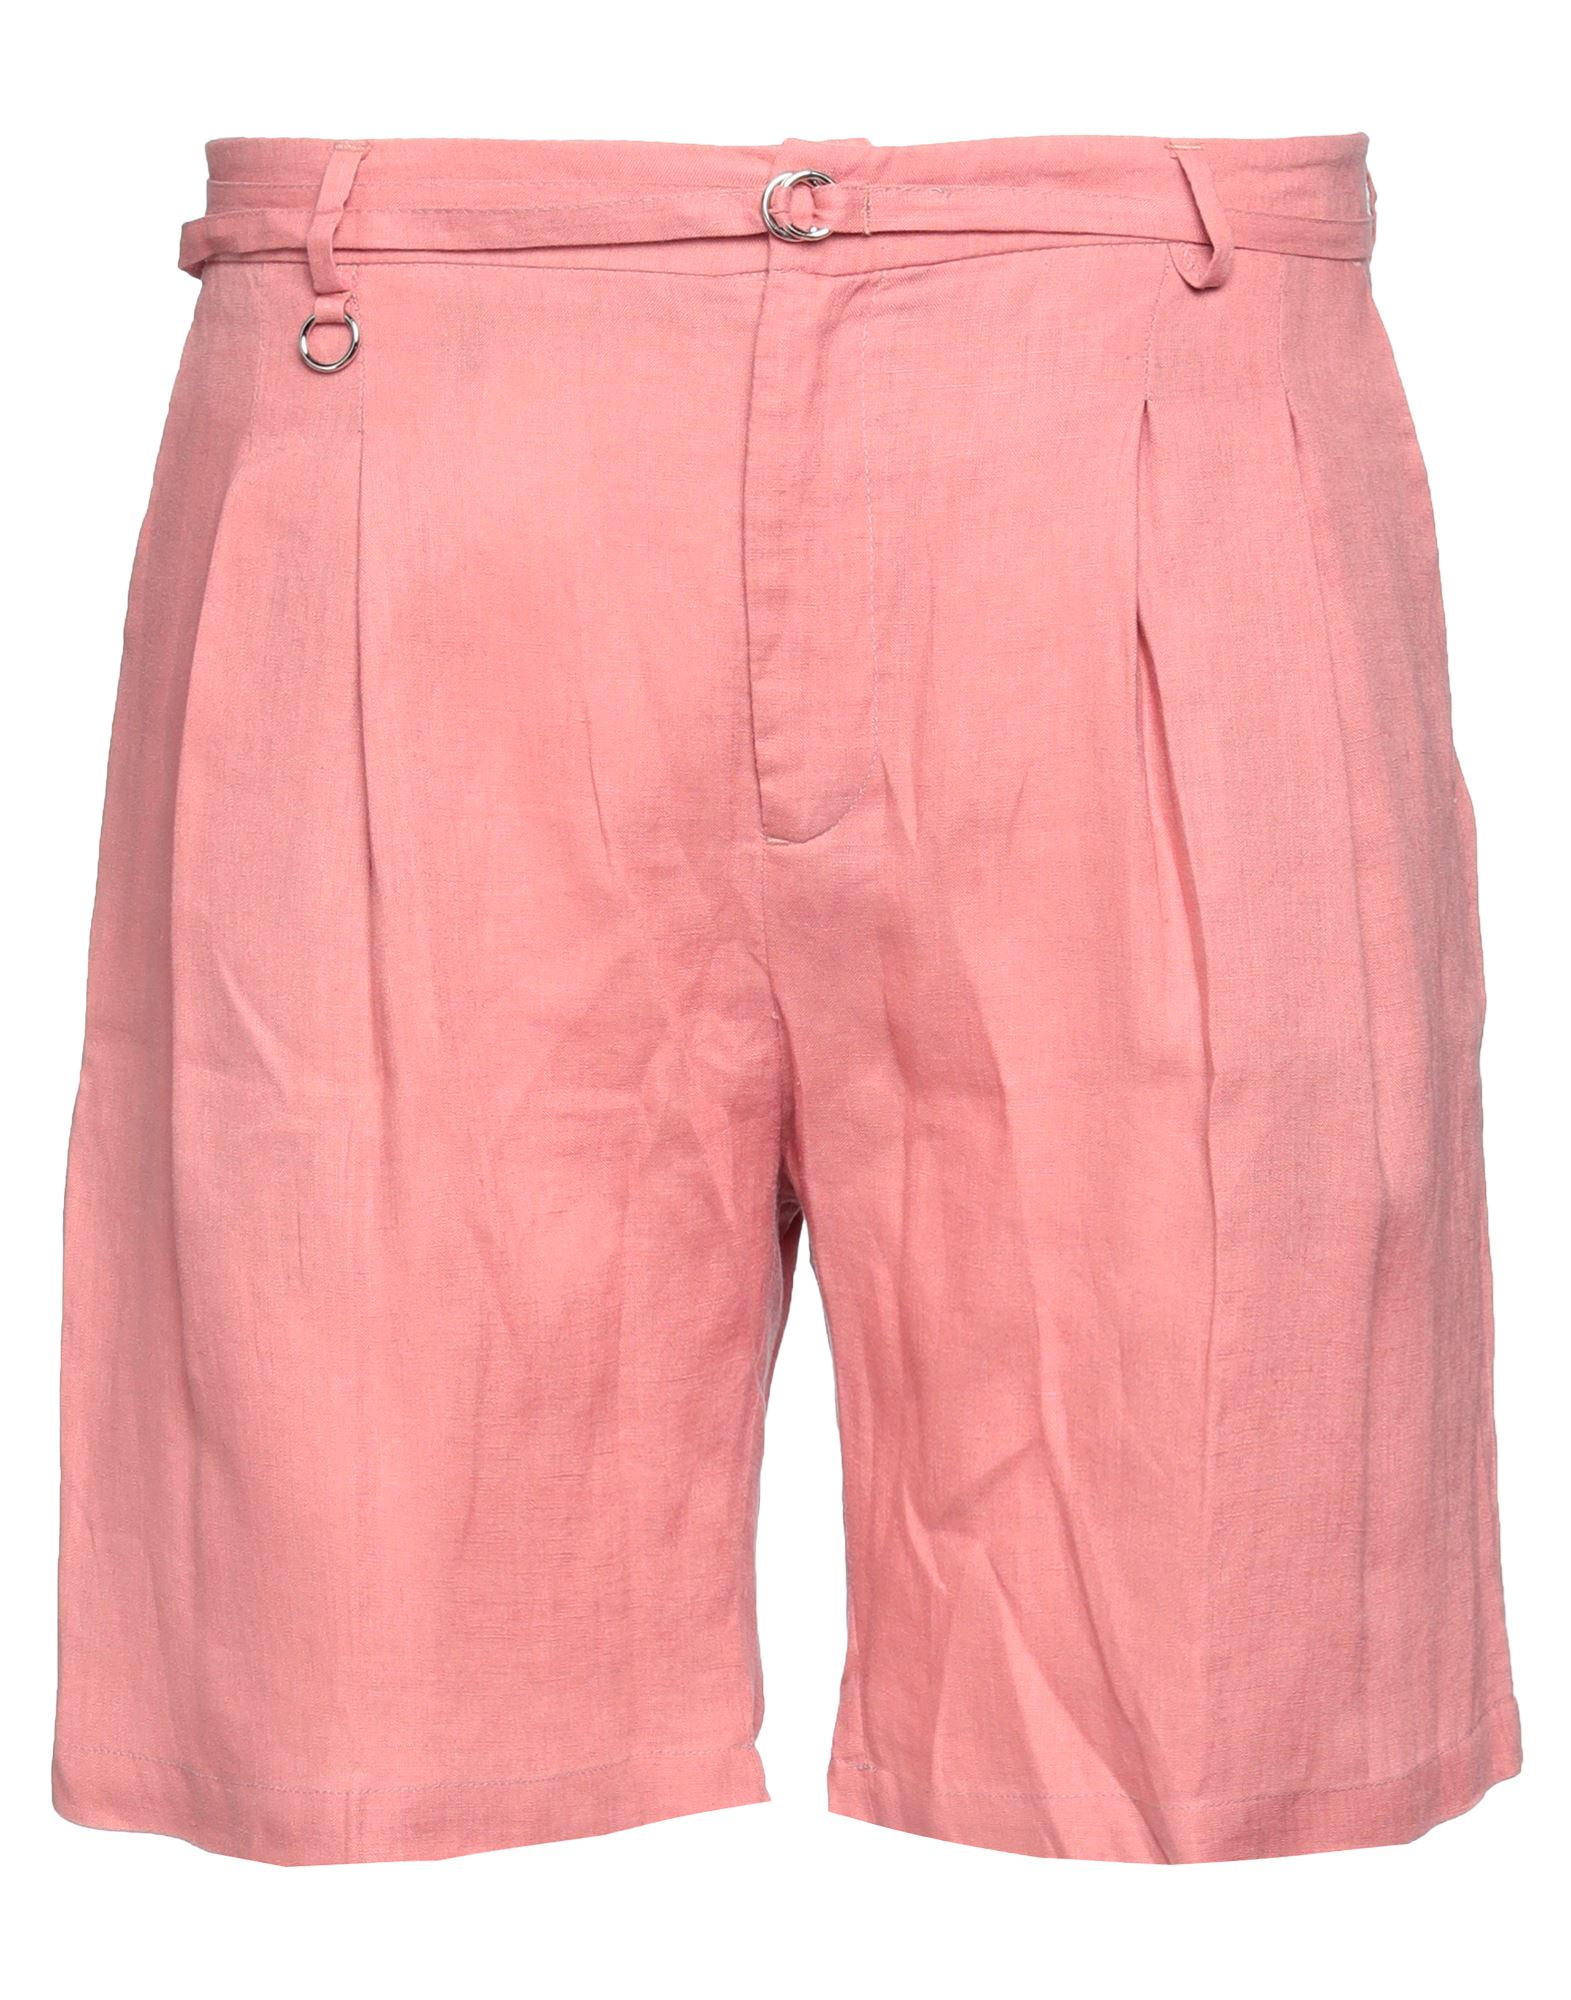 Golden Craft 1957 Man Shorts & Bermuda Shorts Pastel Pink Size 34 Linen